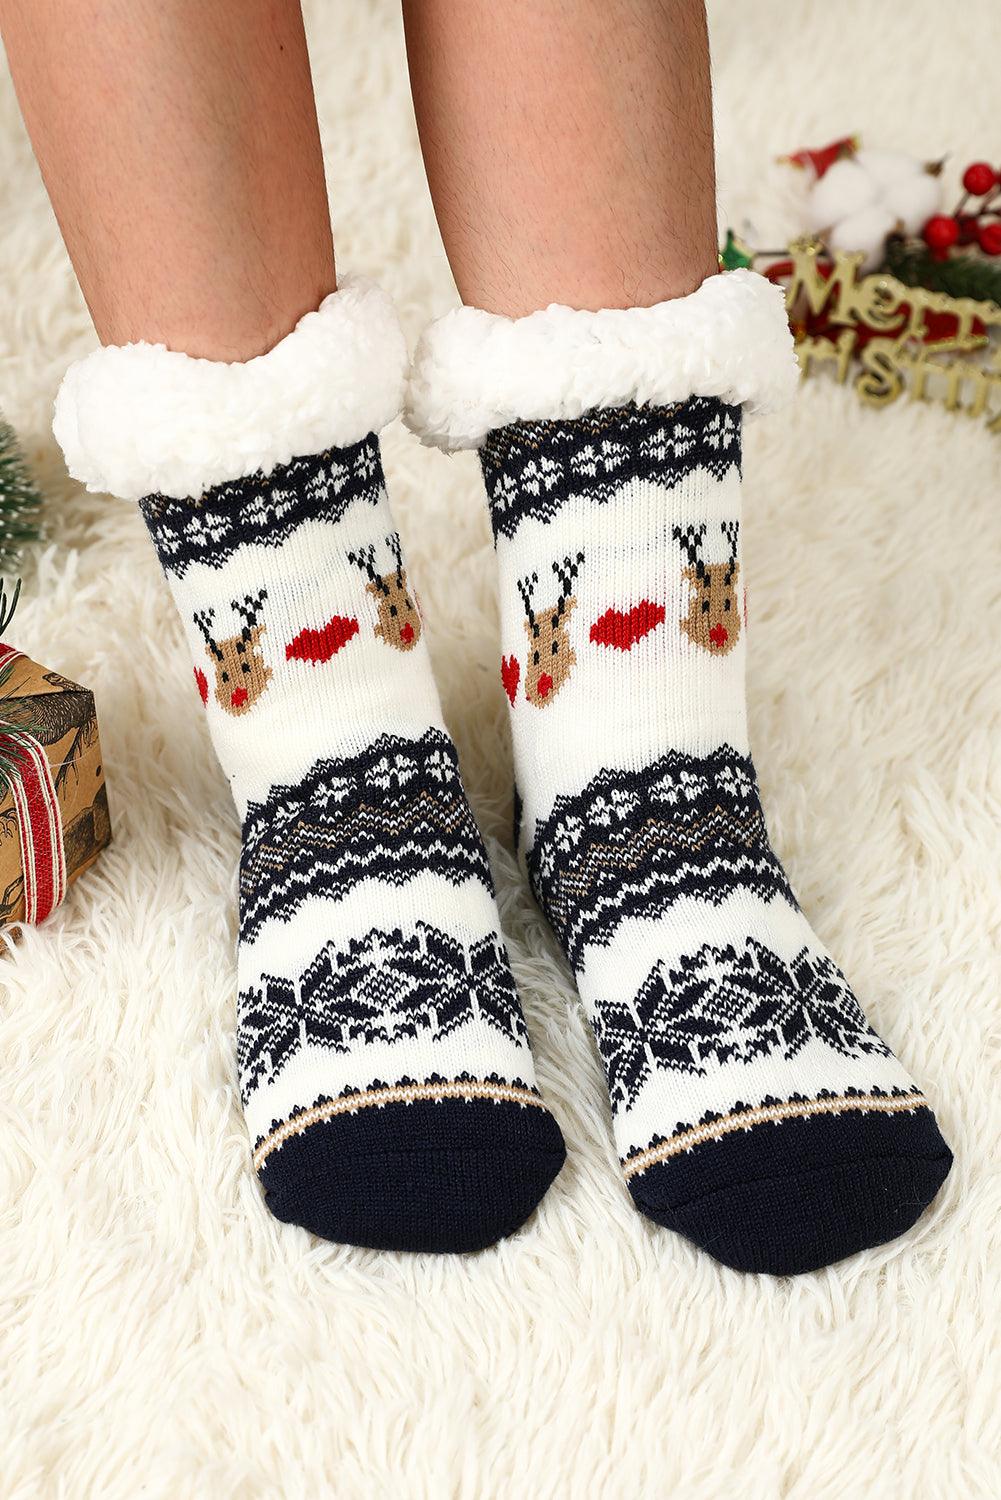 Fiery Red Christmas Flake Thermal Socks - L & M Kee, LLC